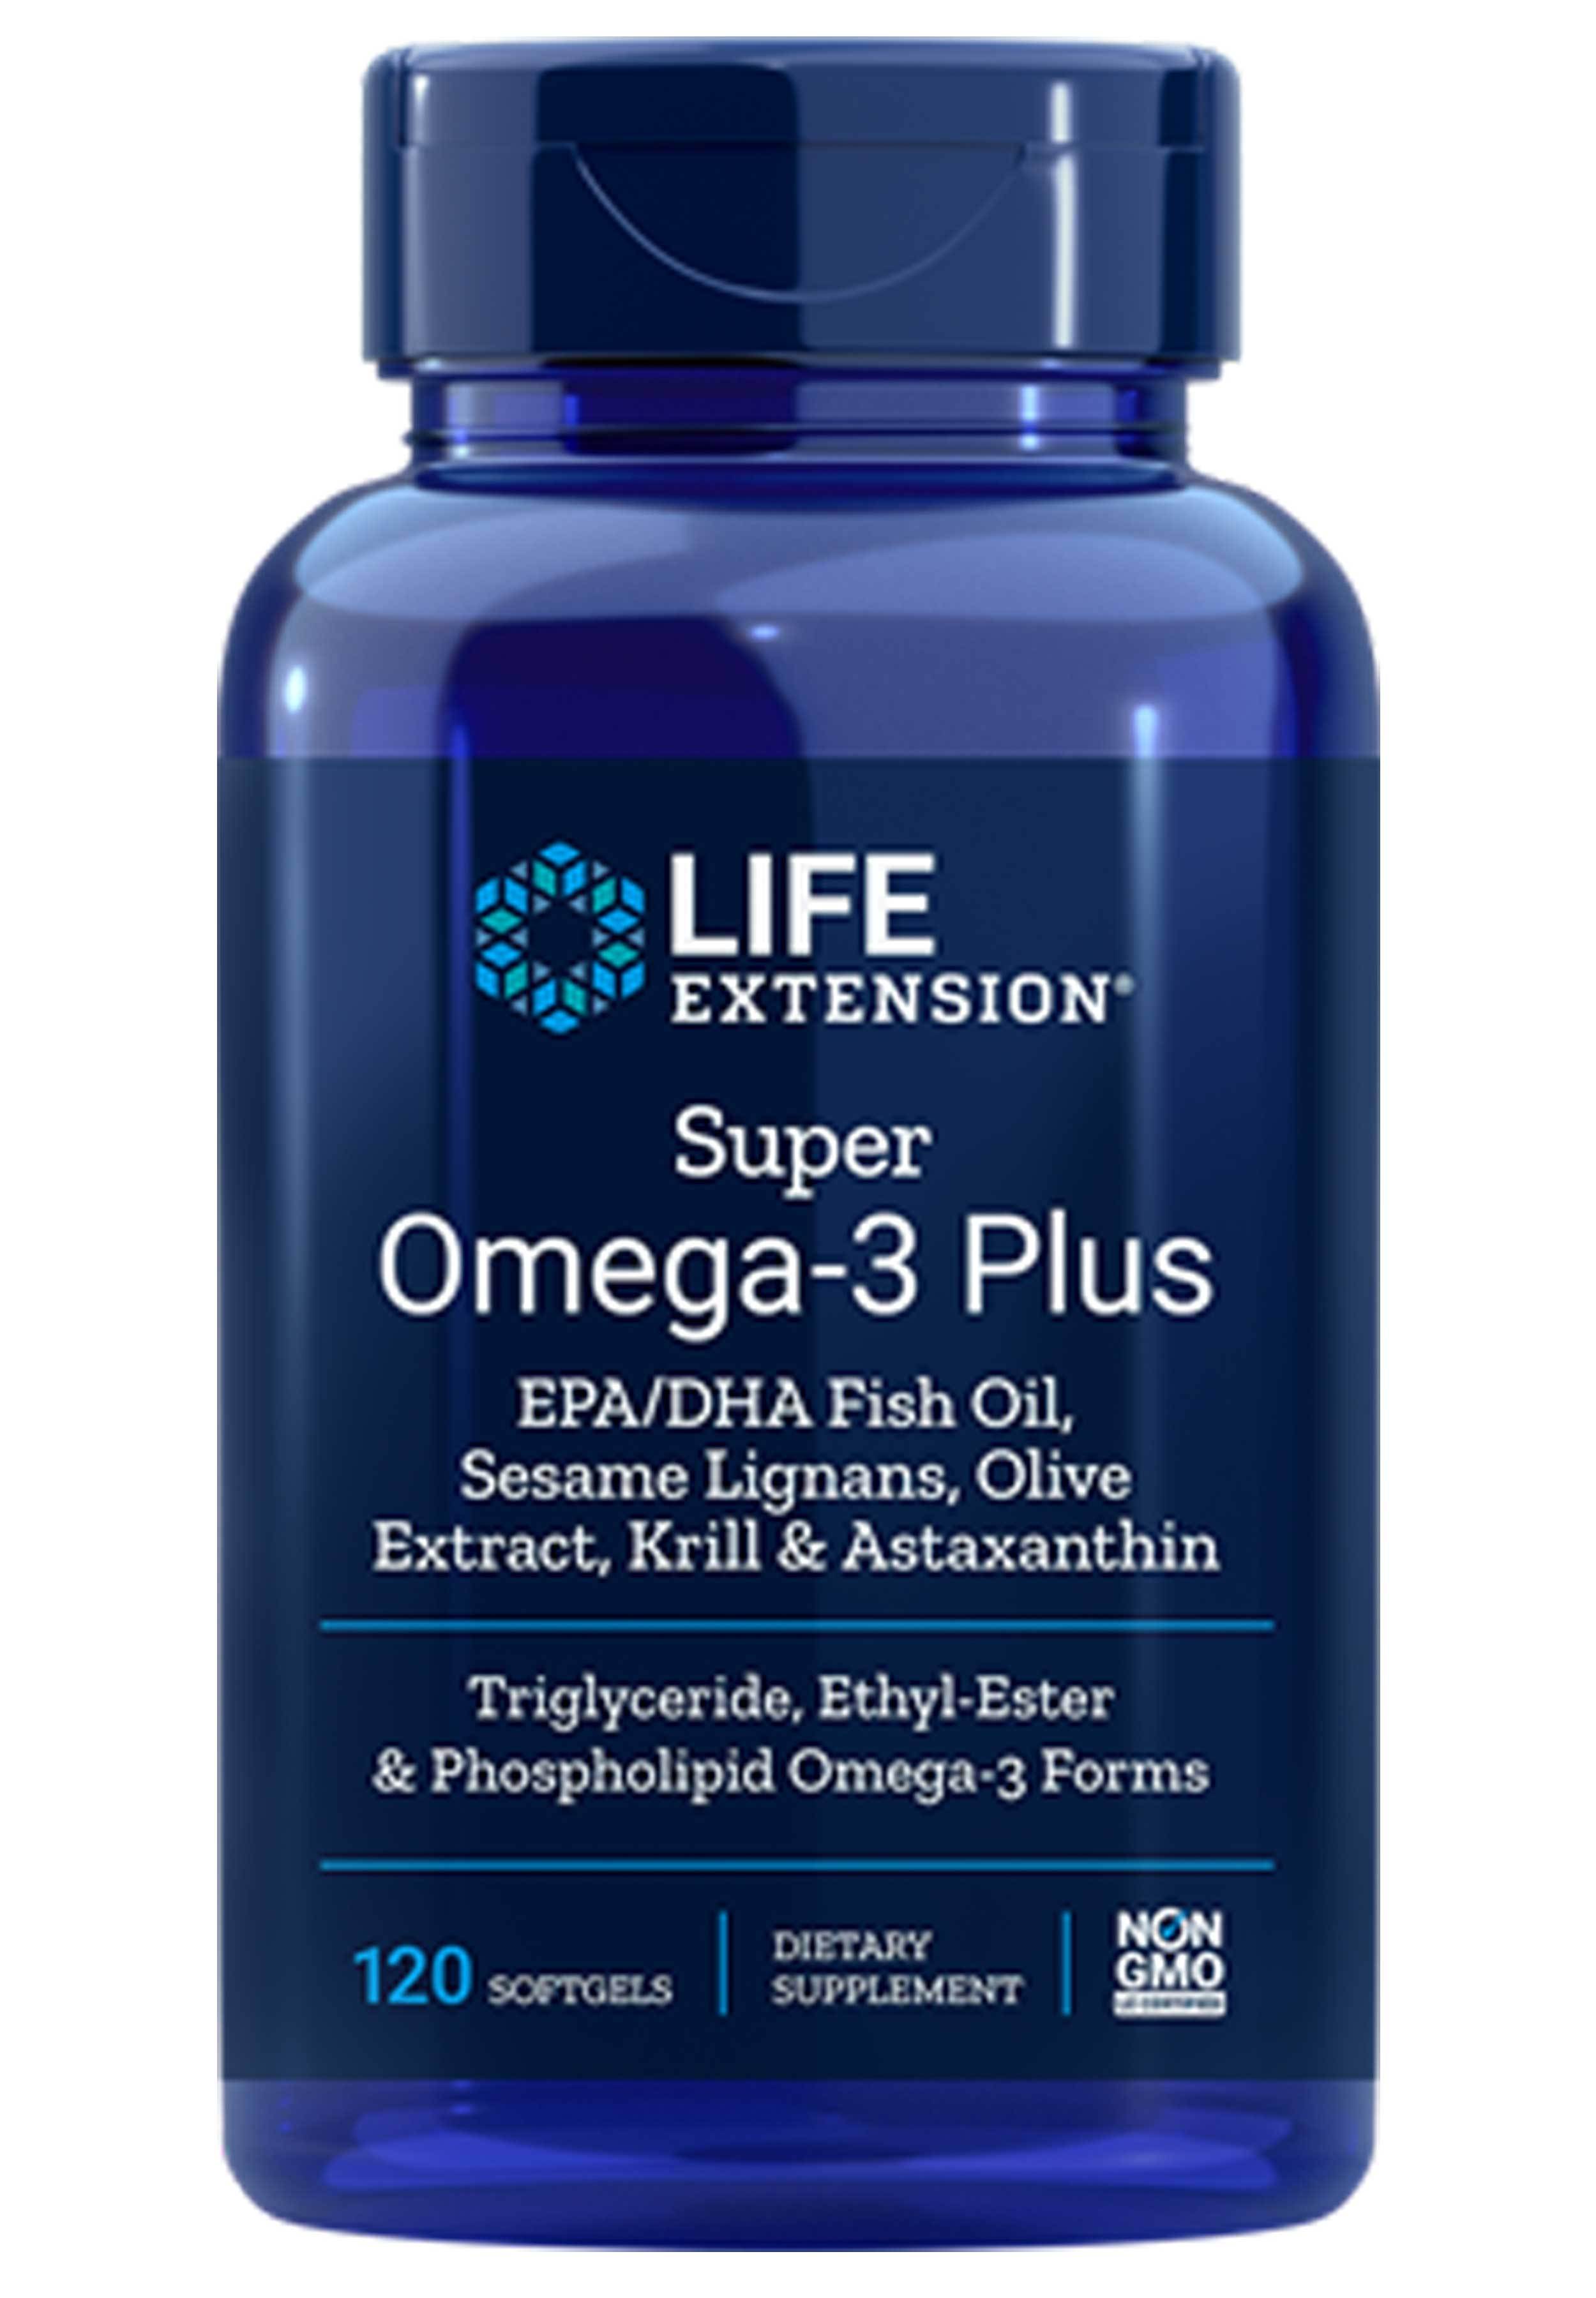 Life Extension Super Omega-3 Plus EPA/DHA with Sesame Lignans